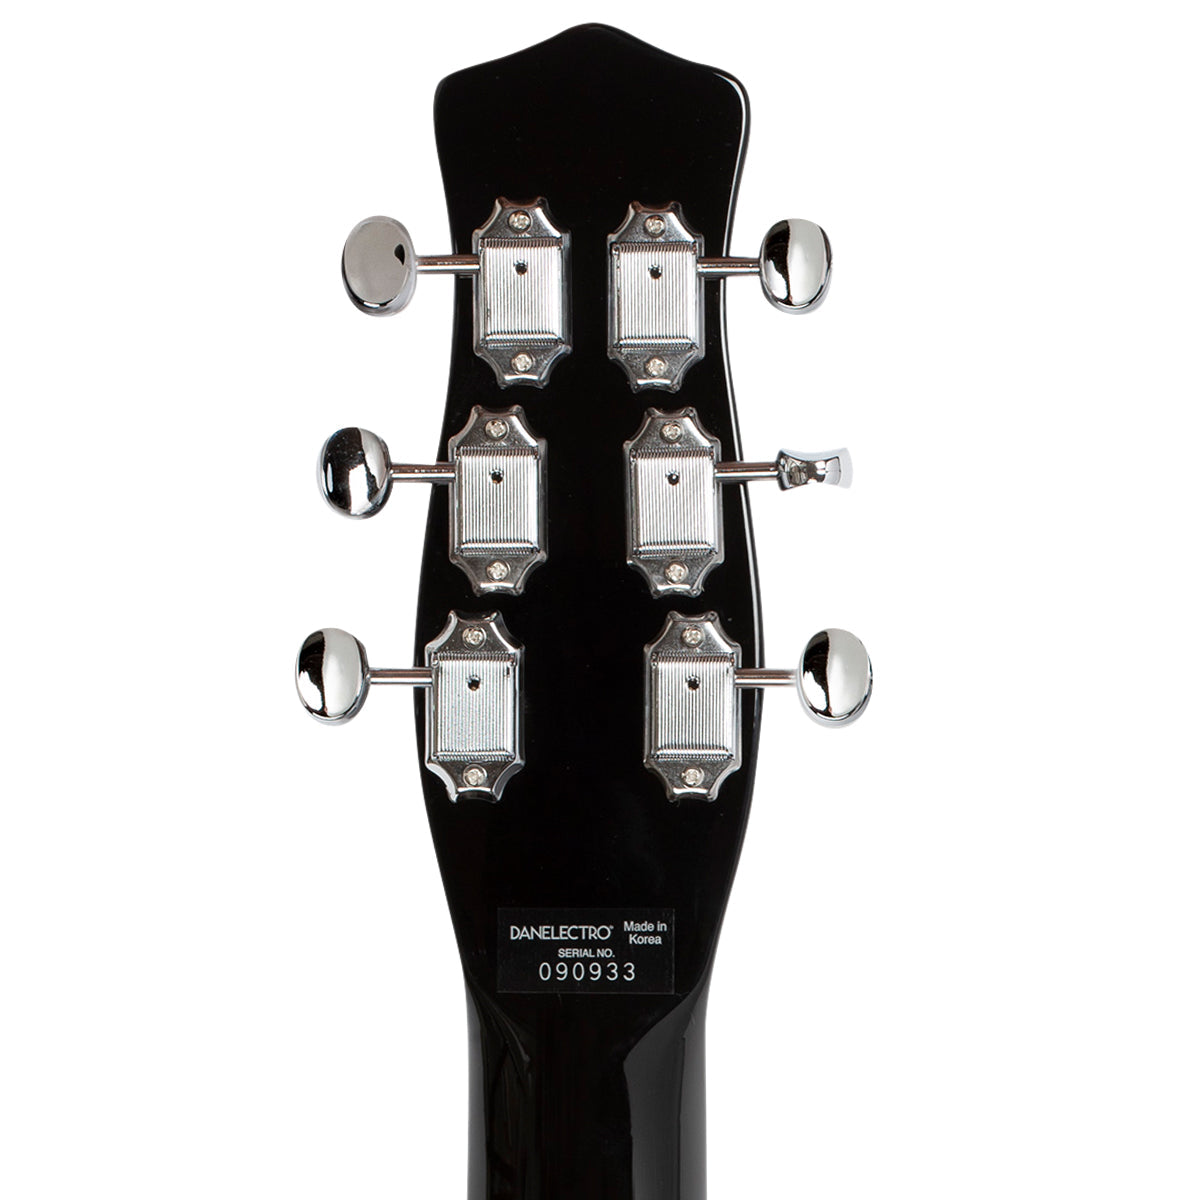 Danelectro Blackout '59M NOS+ Electric Guitar ~ Purple Metalflake, Electric Guitar for sale at Richards Guitars.